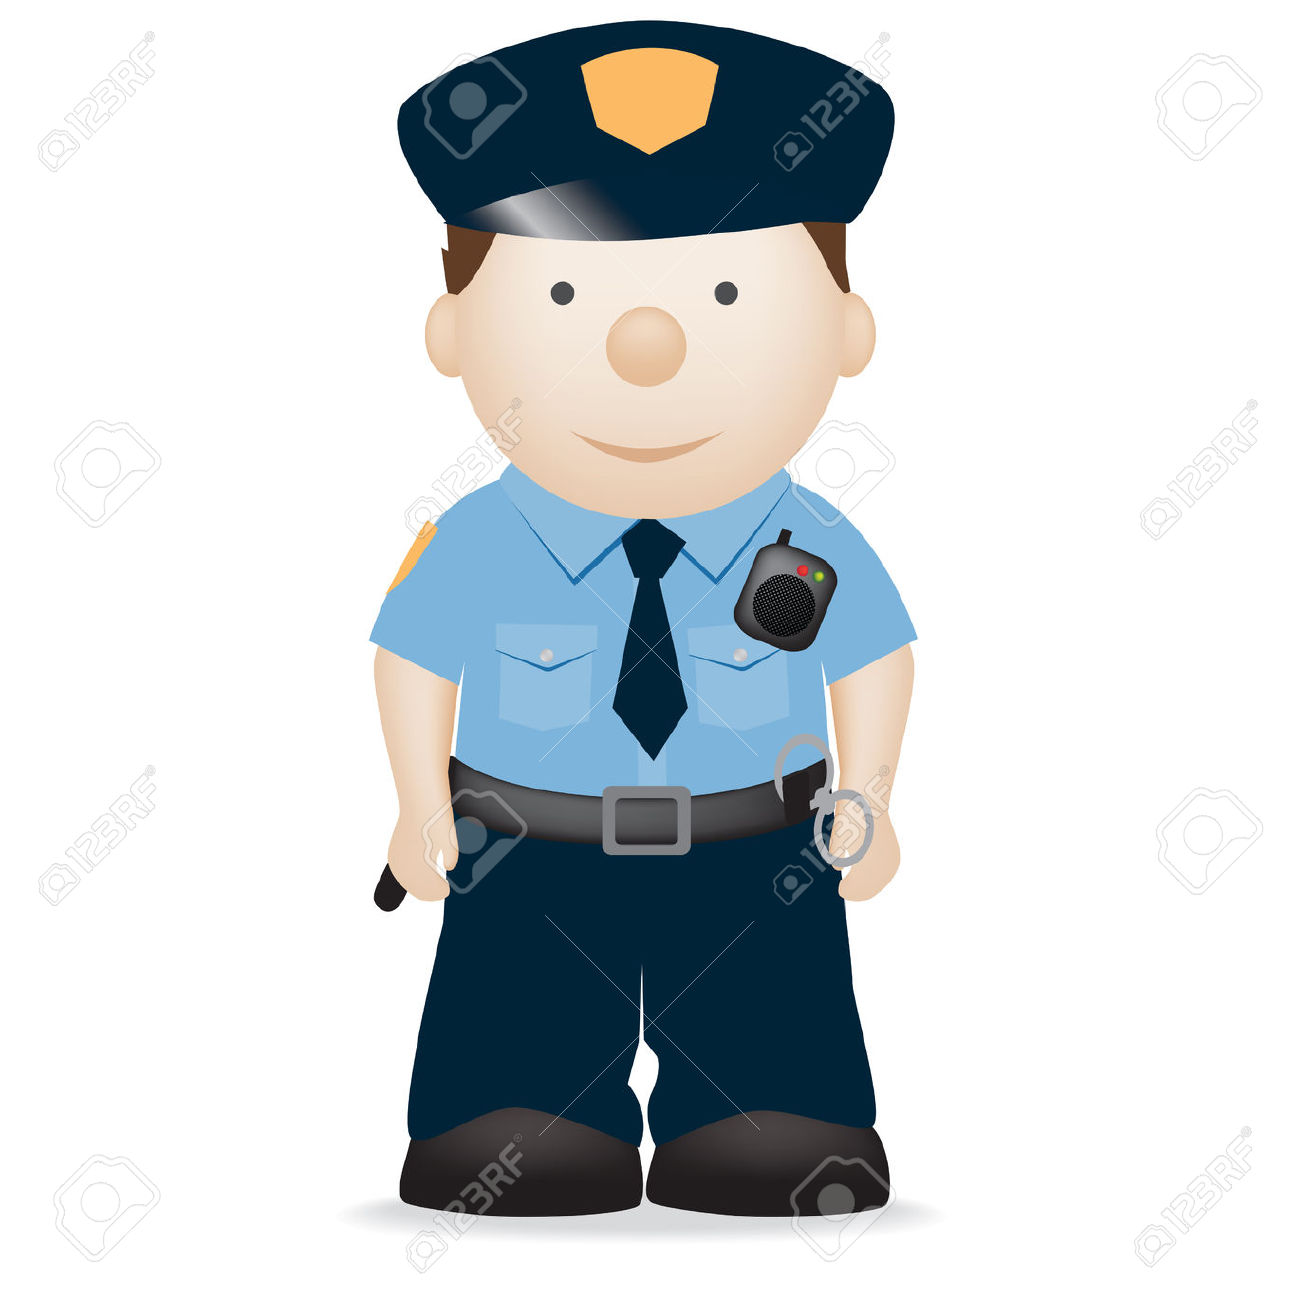 Police Uniform Clipart.